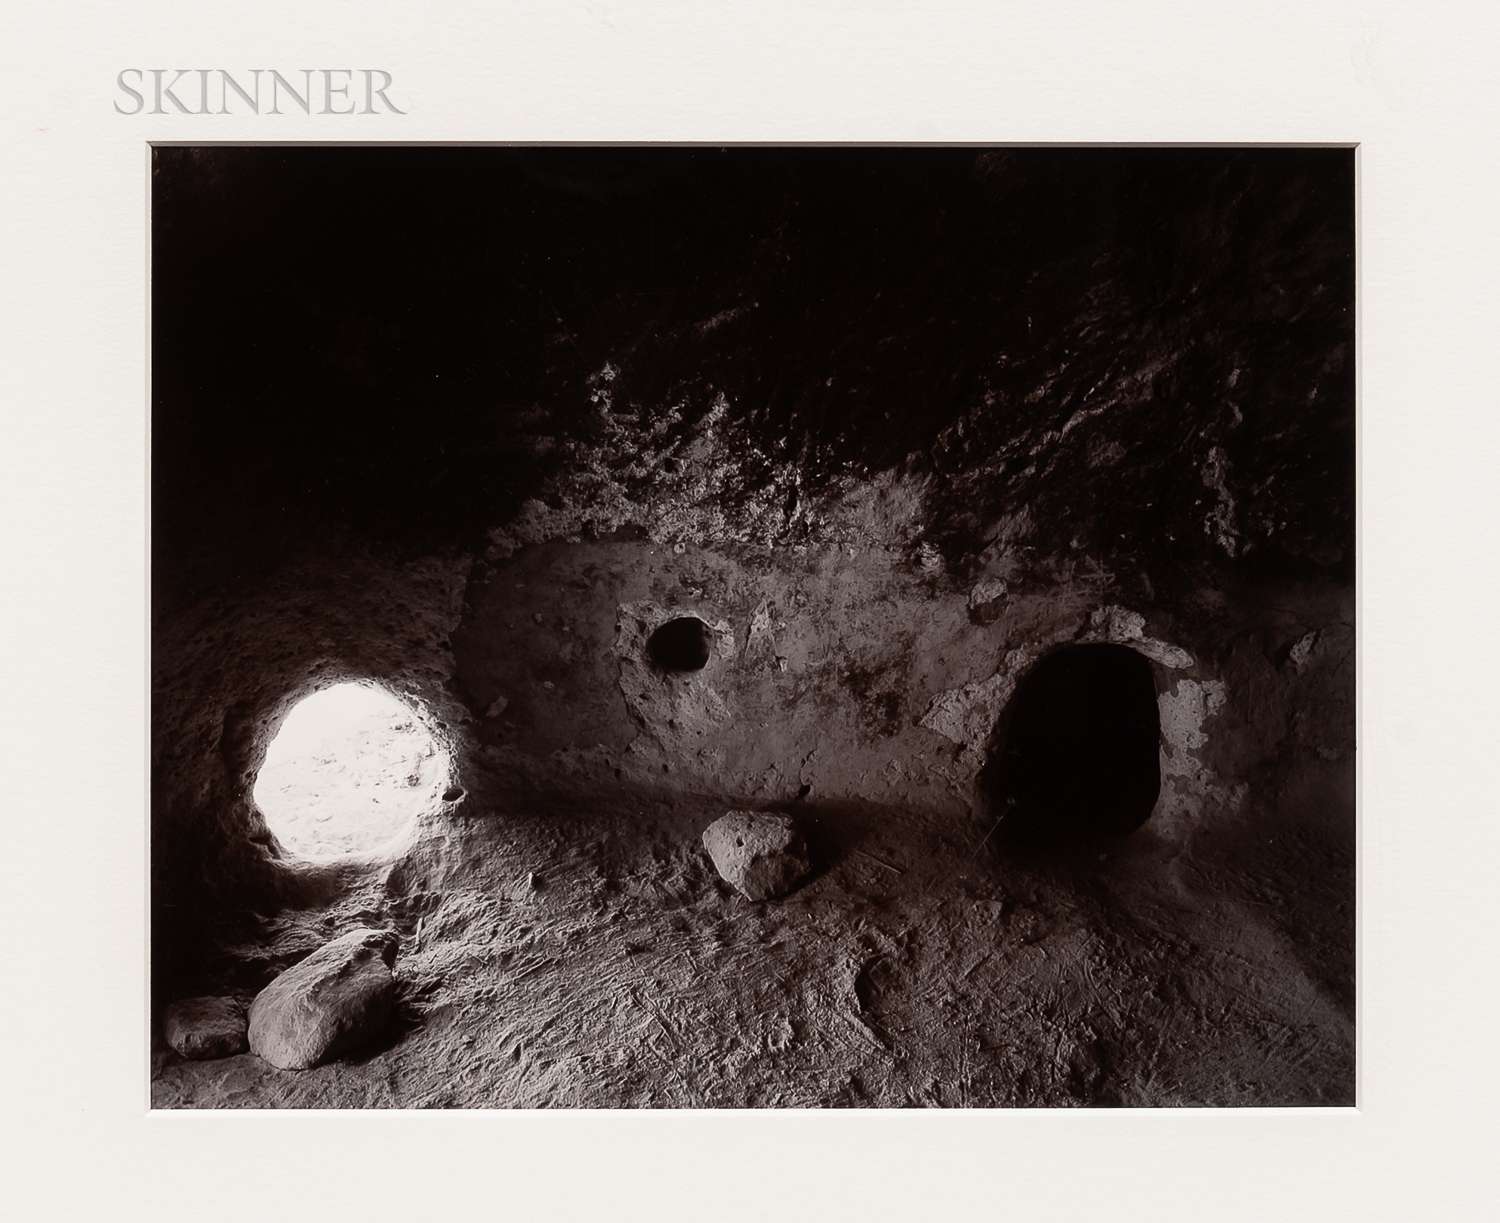 Pre-historic Cave, Tsankawee
[ sic
] , New Mexico, by Linda Connor, 1988